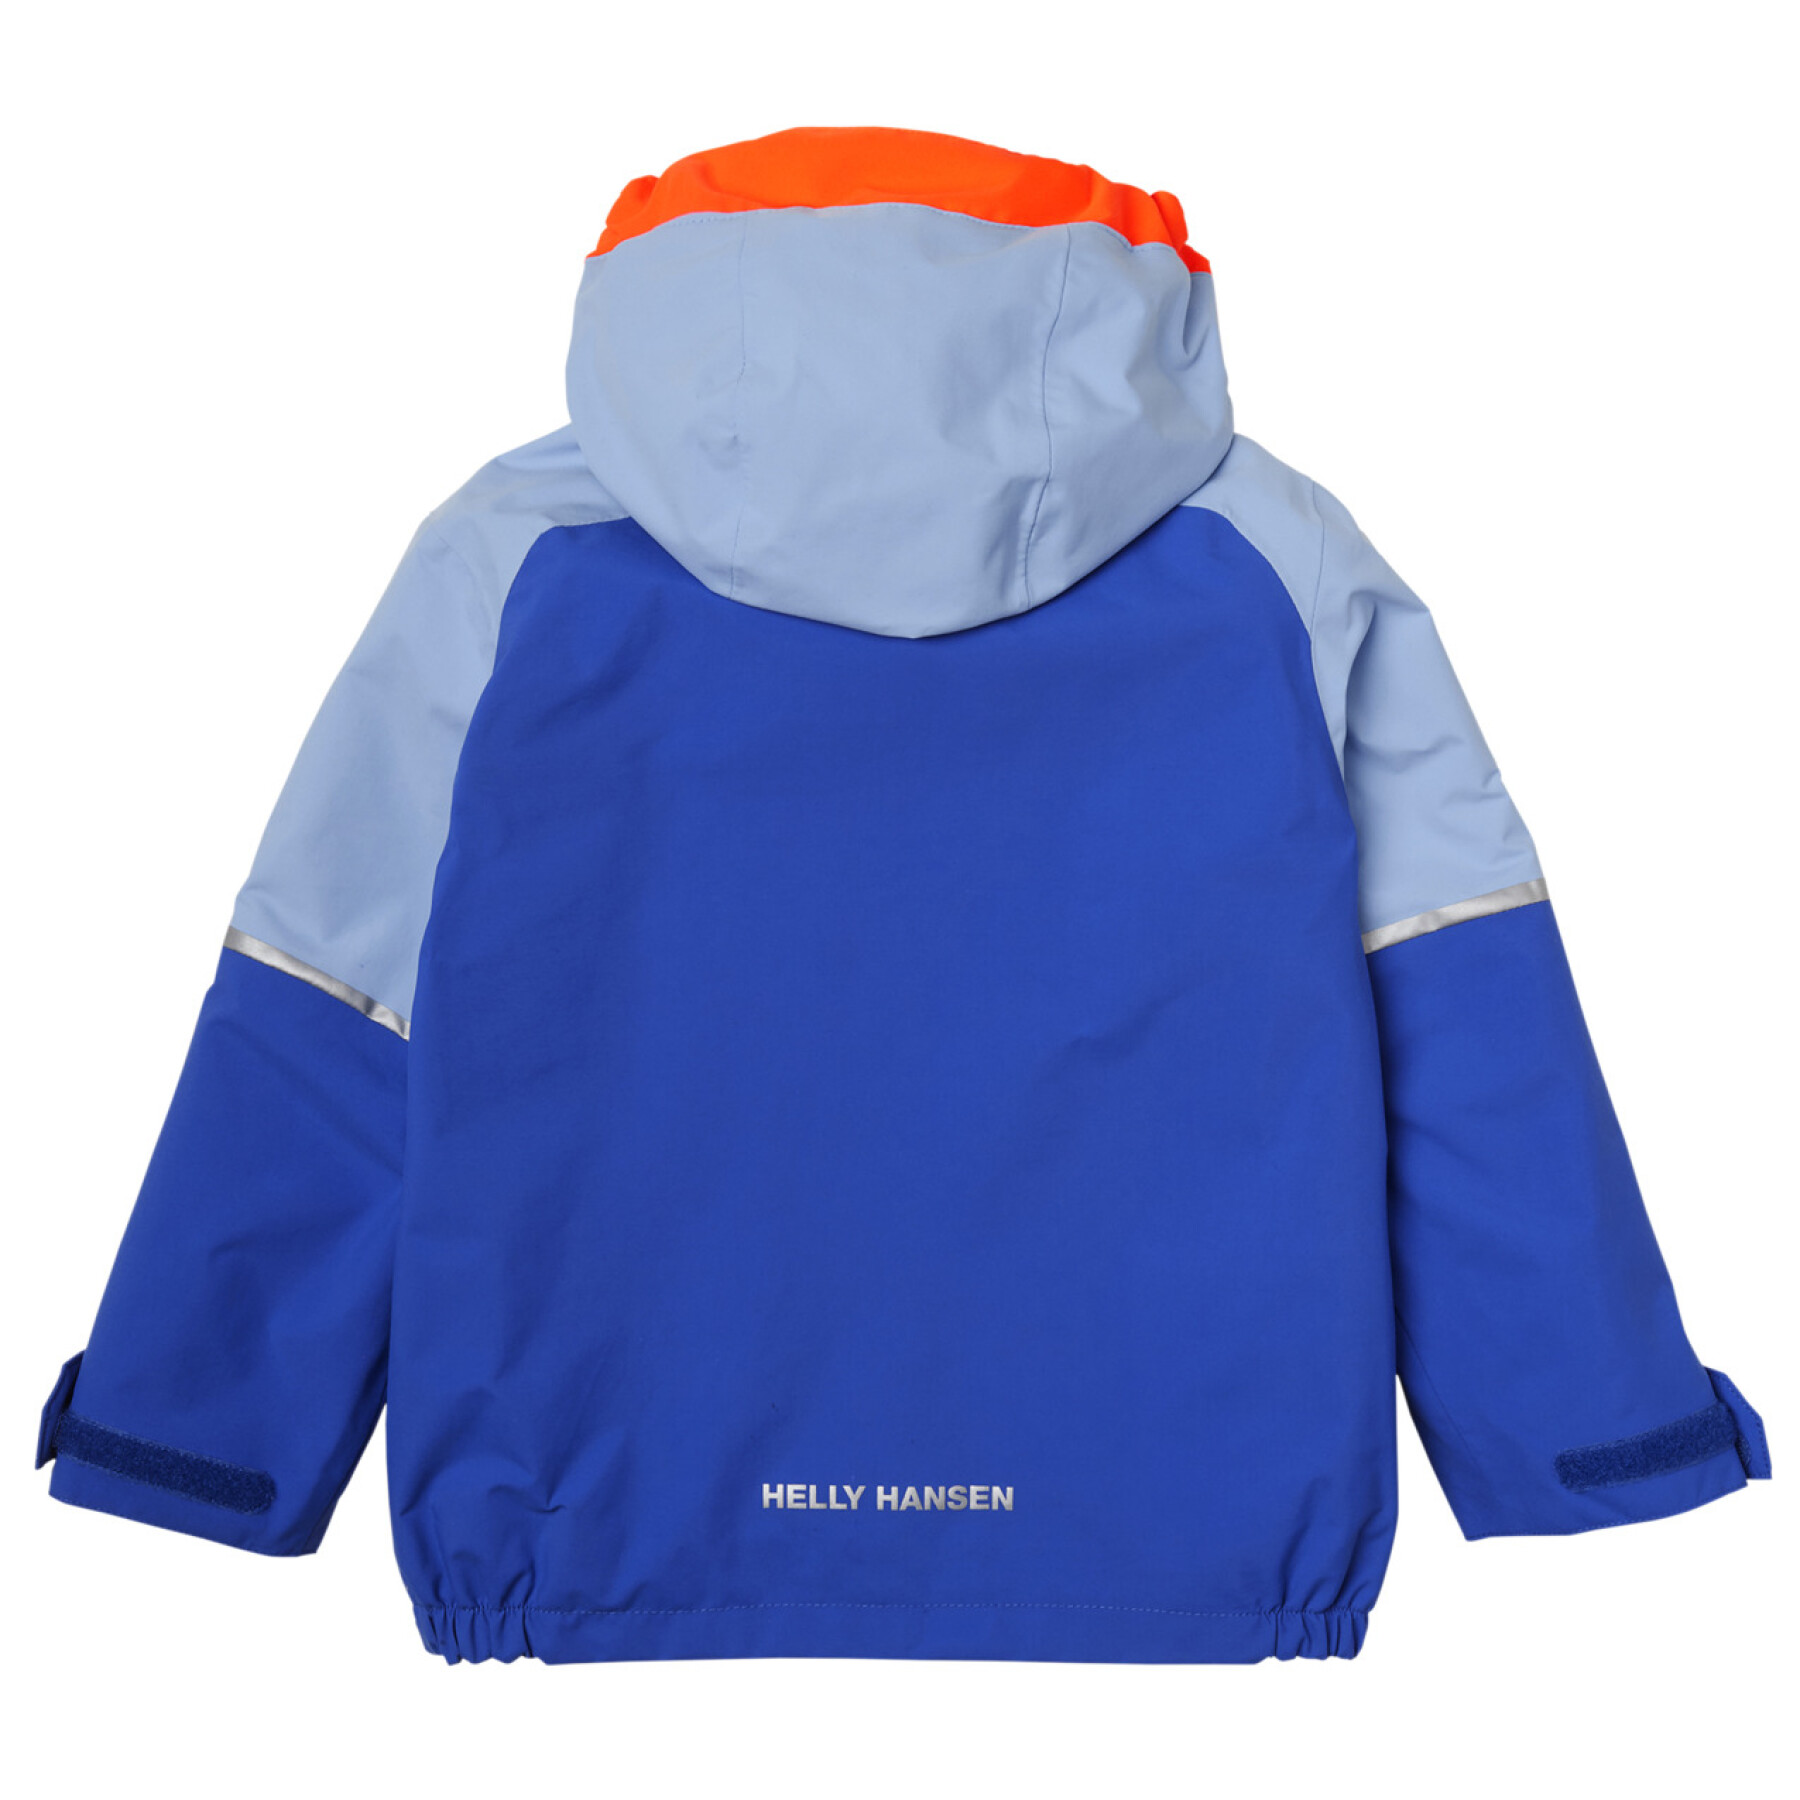 Waterproof jacket for children Helly Hansen Shelter